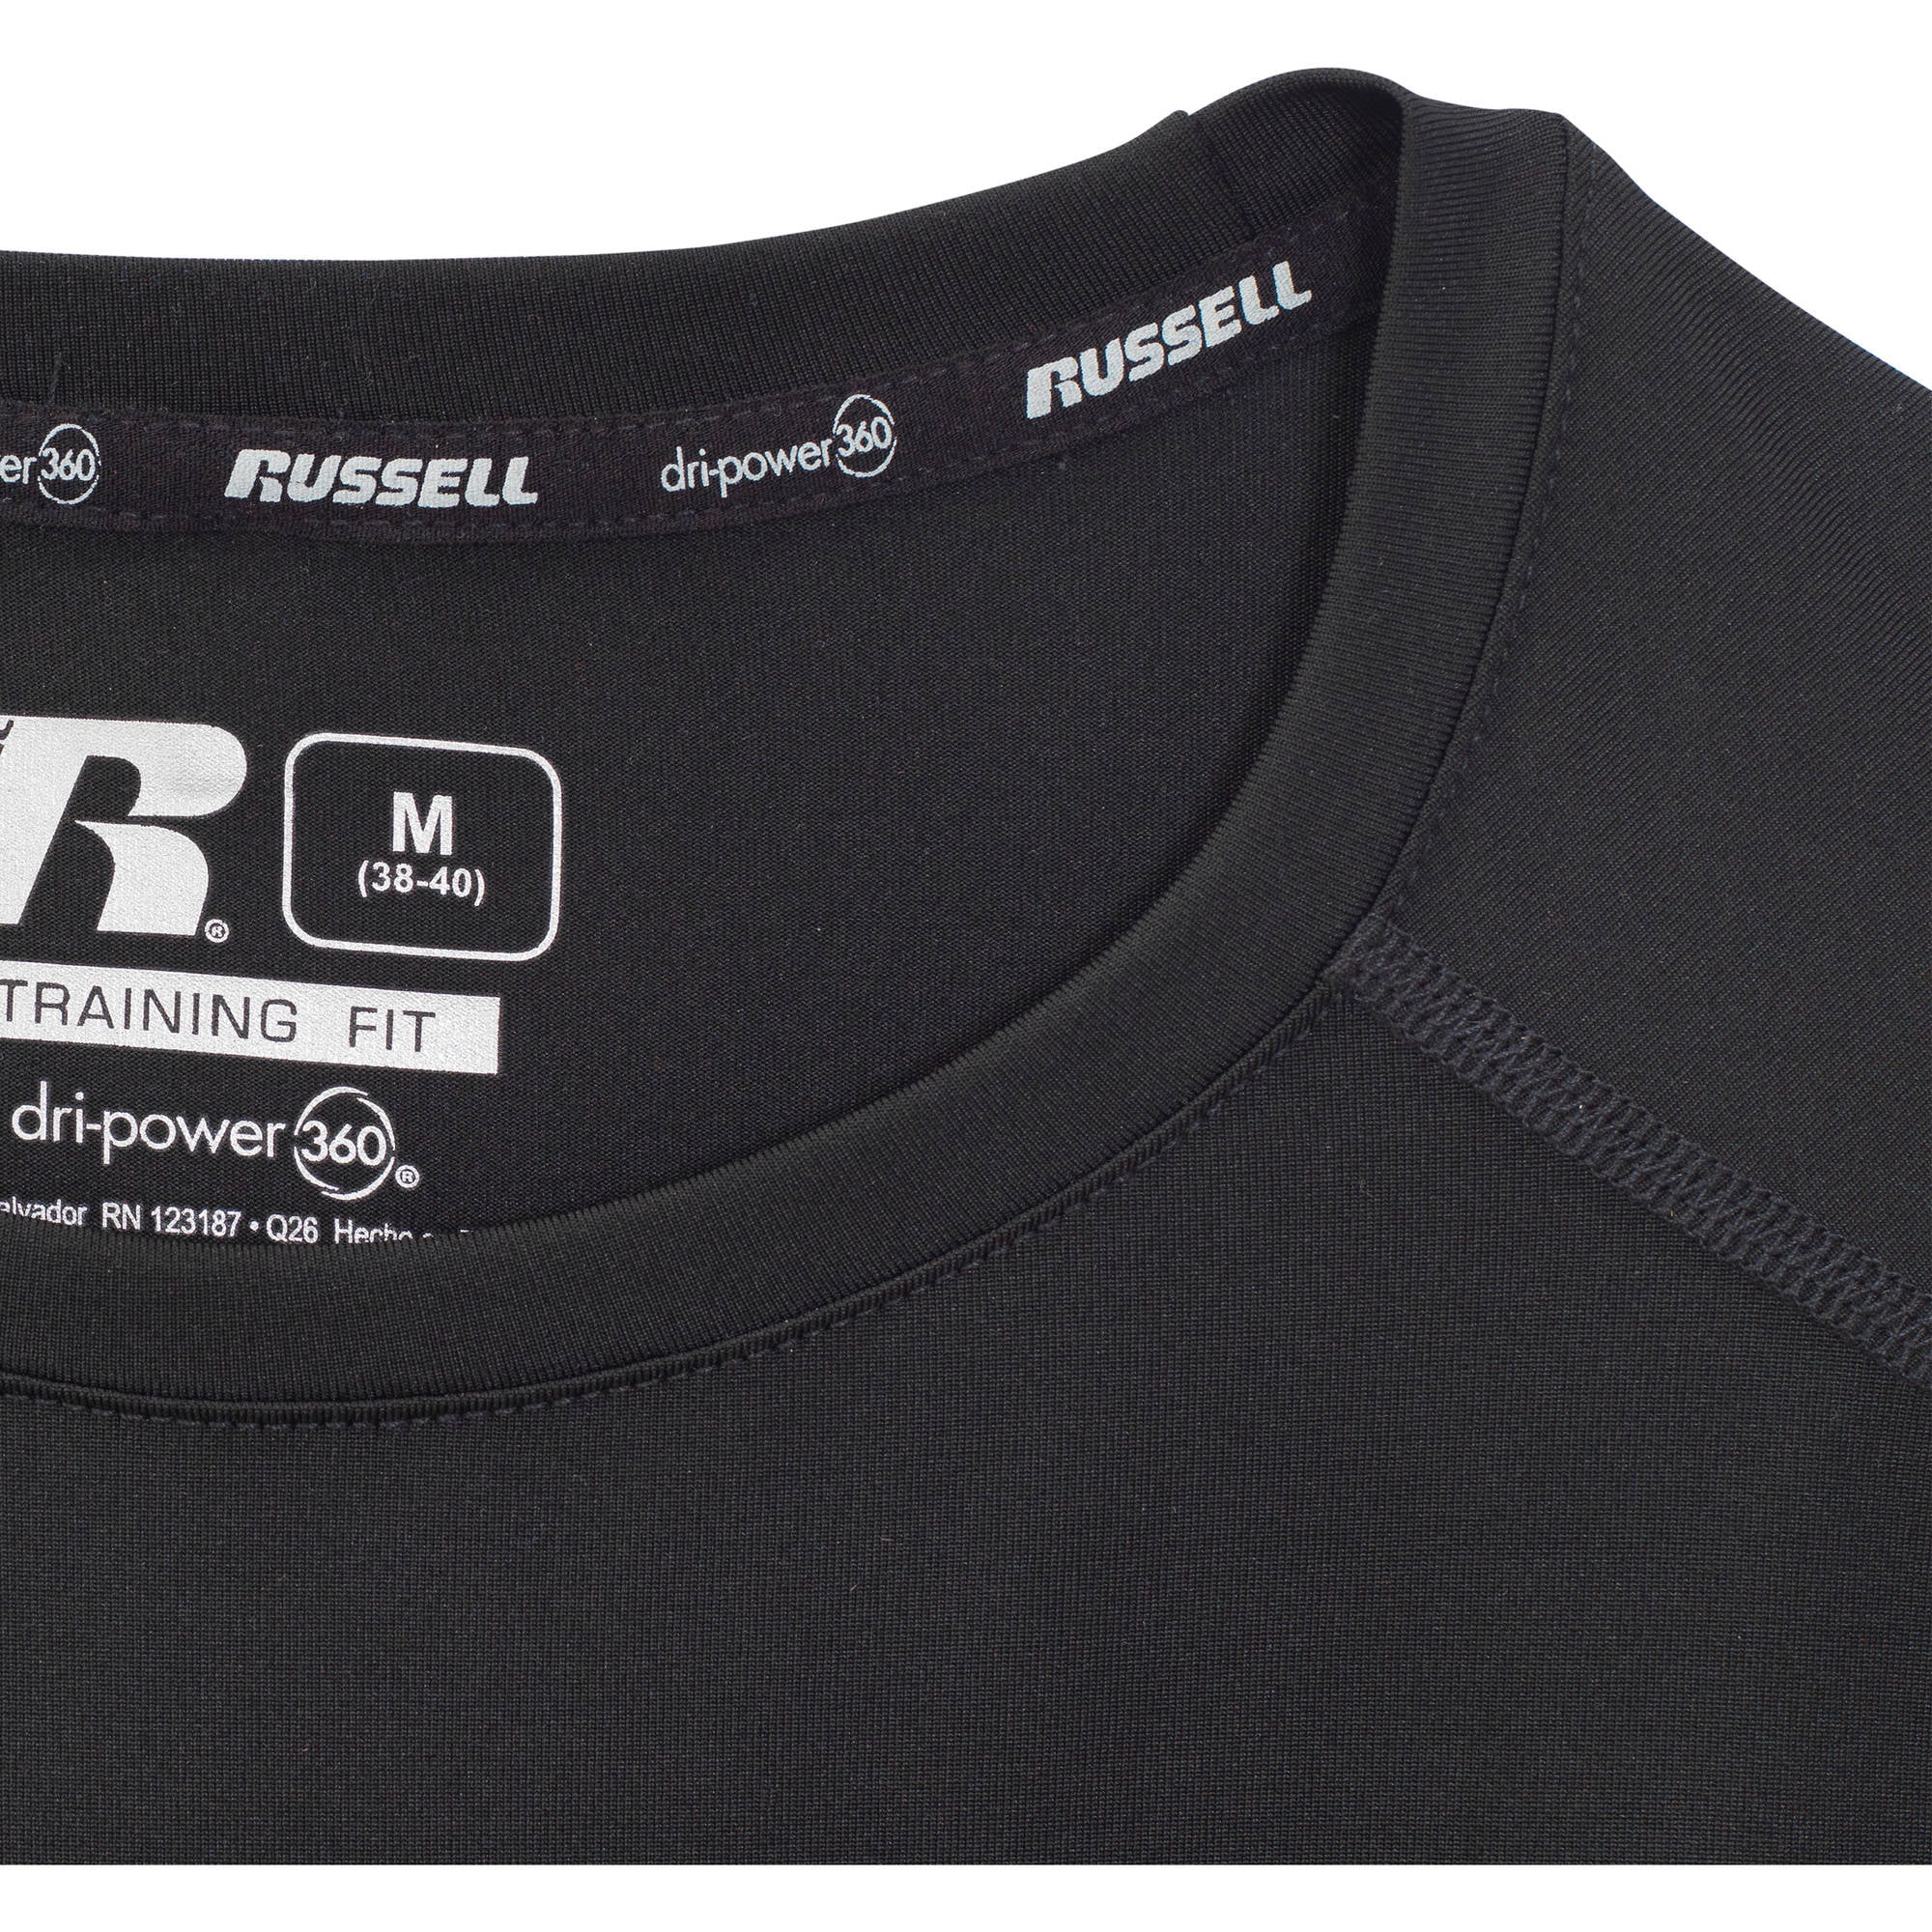 russell dri power 360 shirts training fit